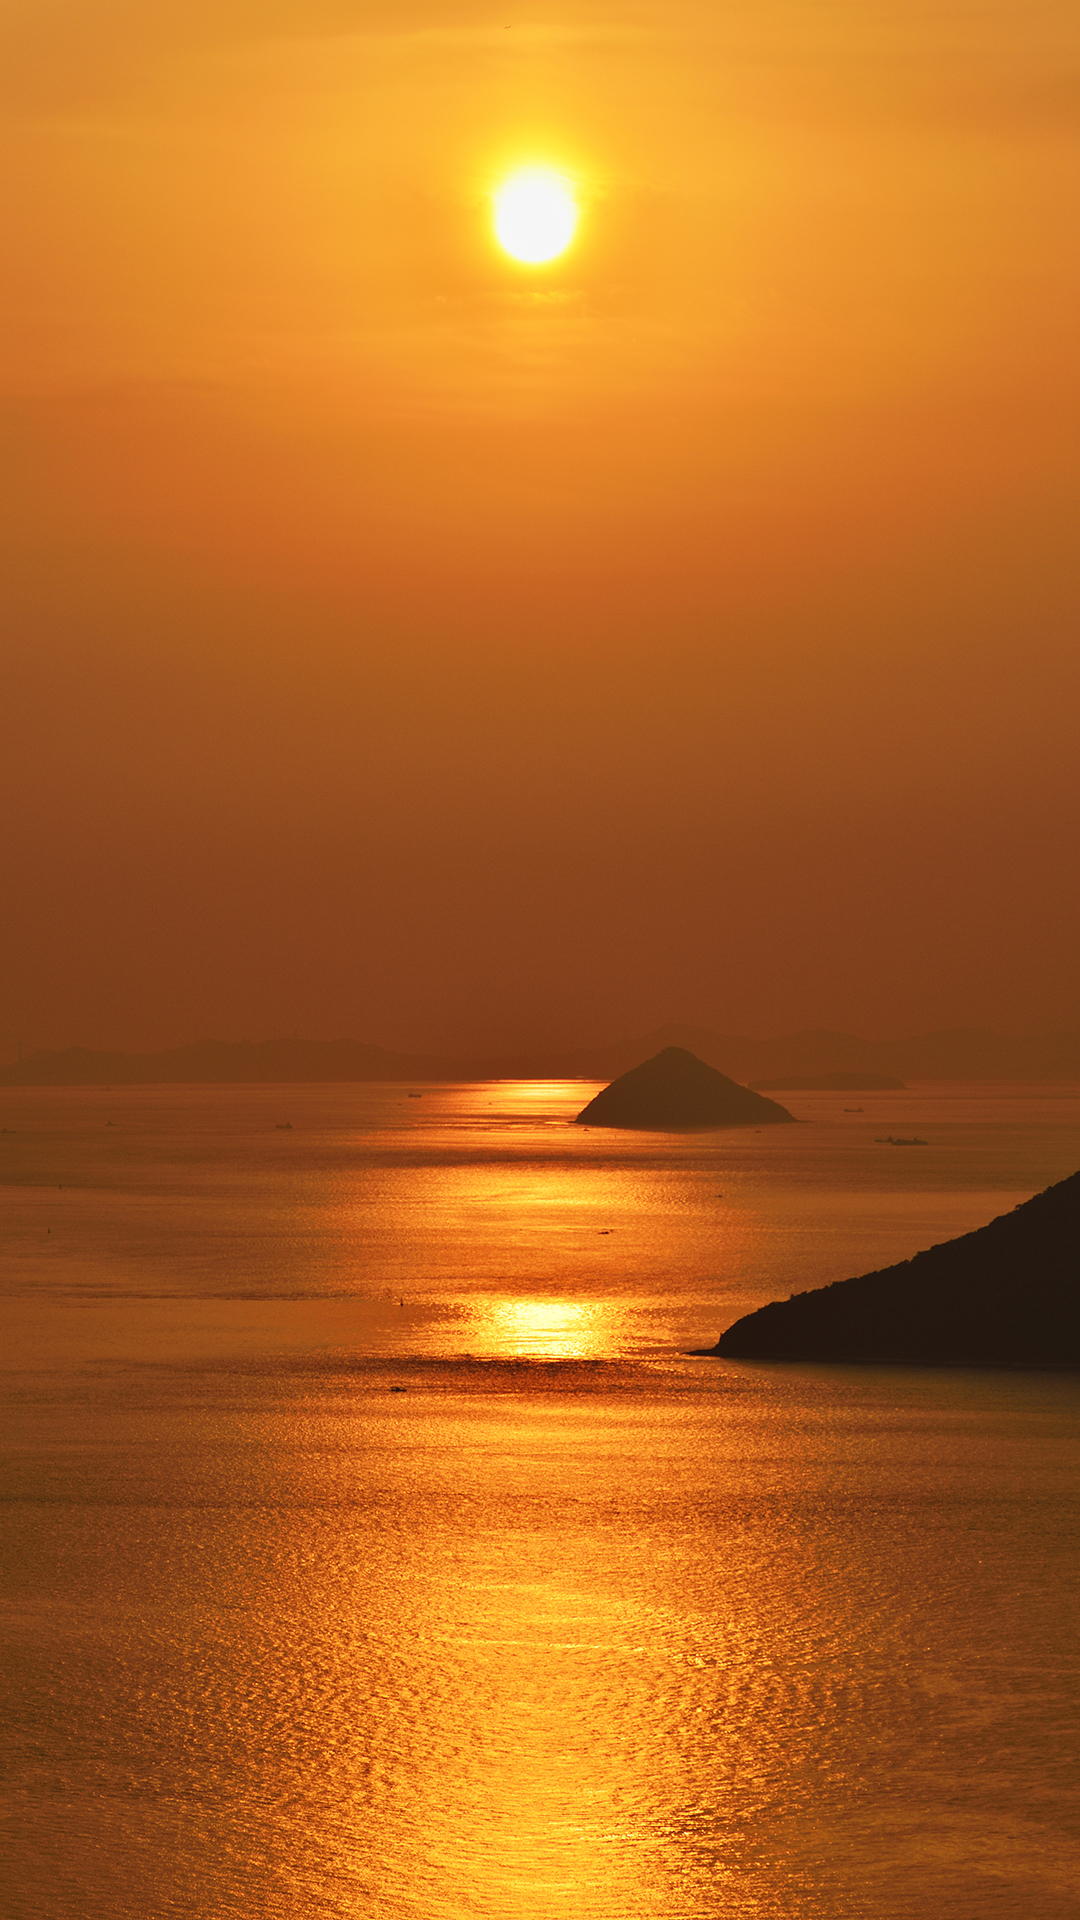 General 1080x1920 nature landscape portrait display water sea Sun island reflection hills sunset orange